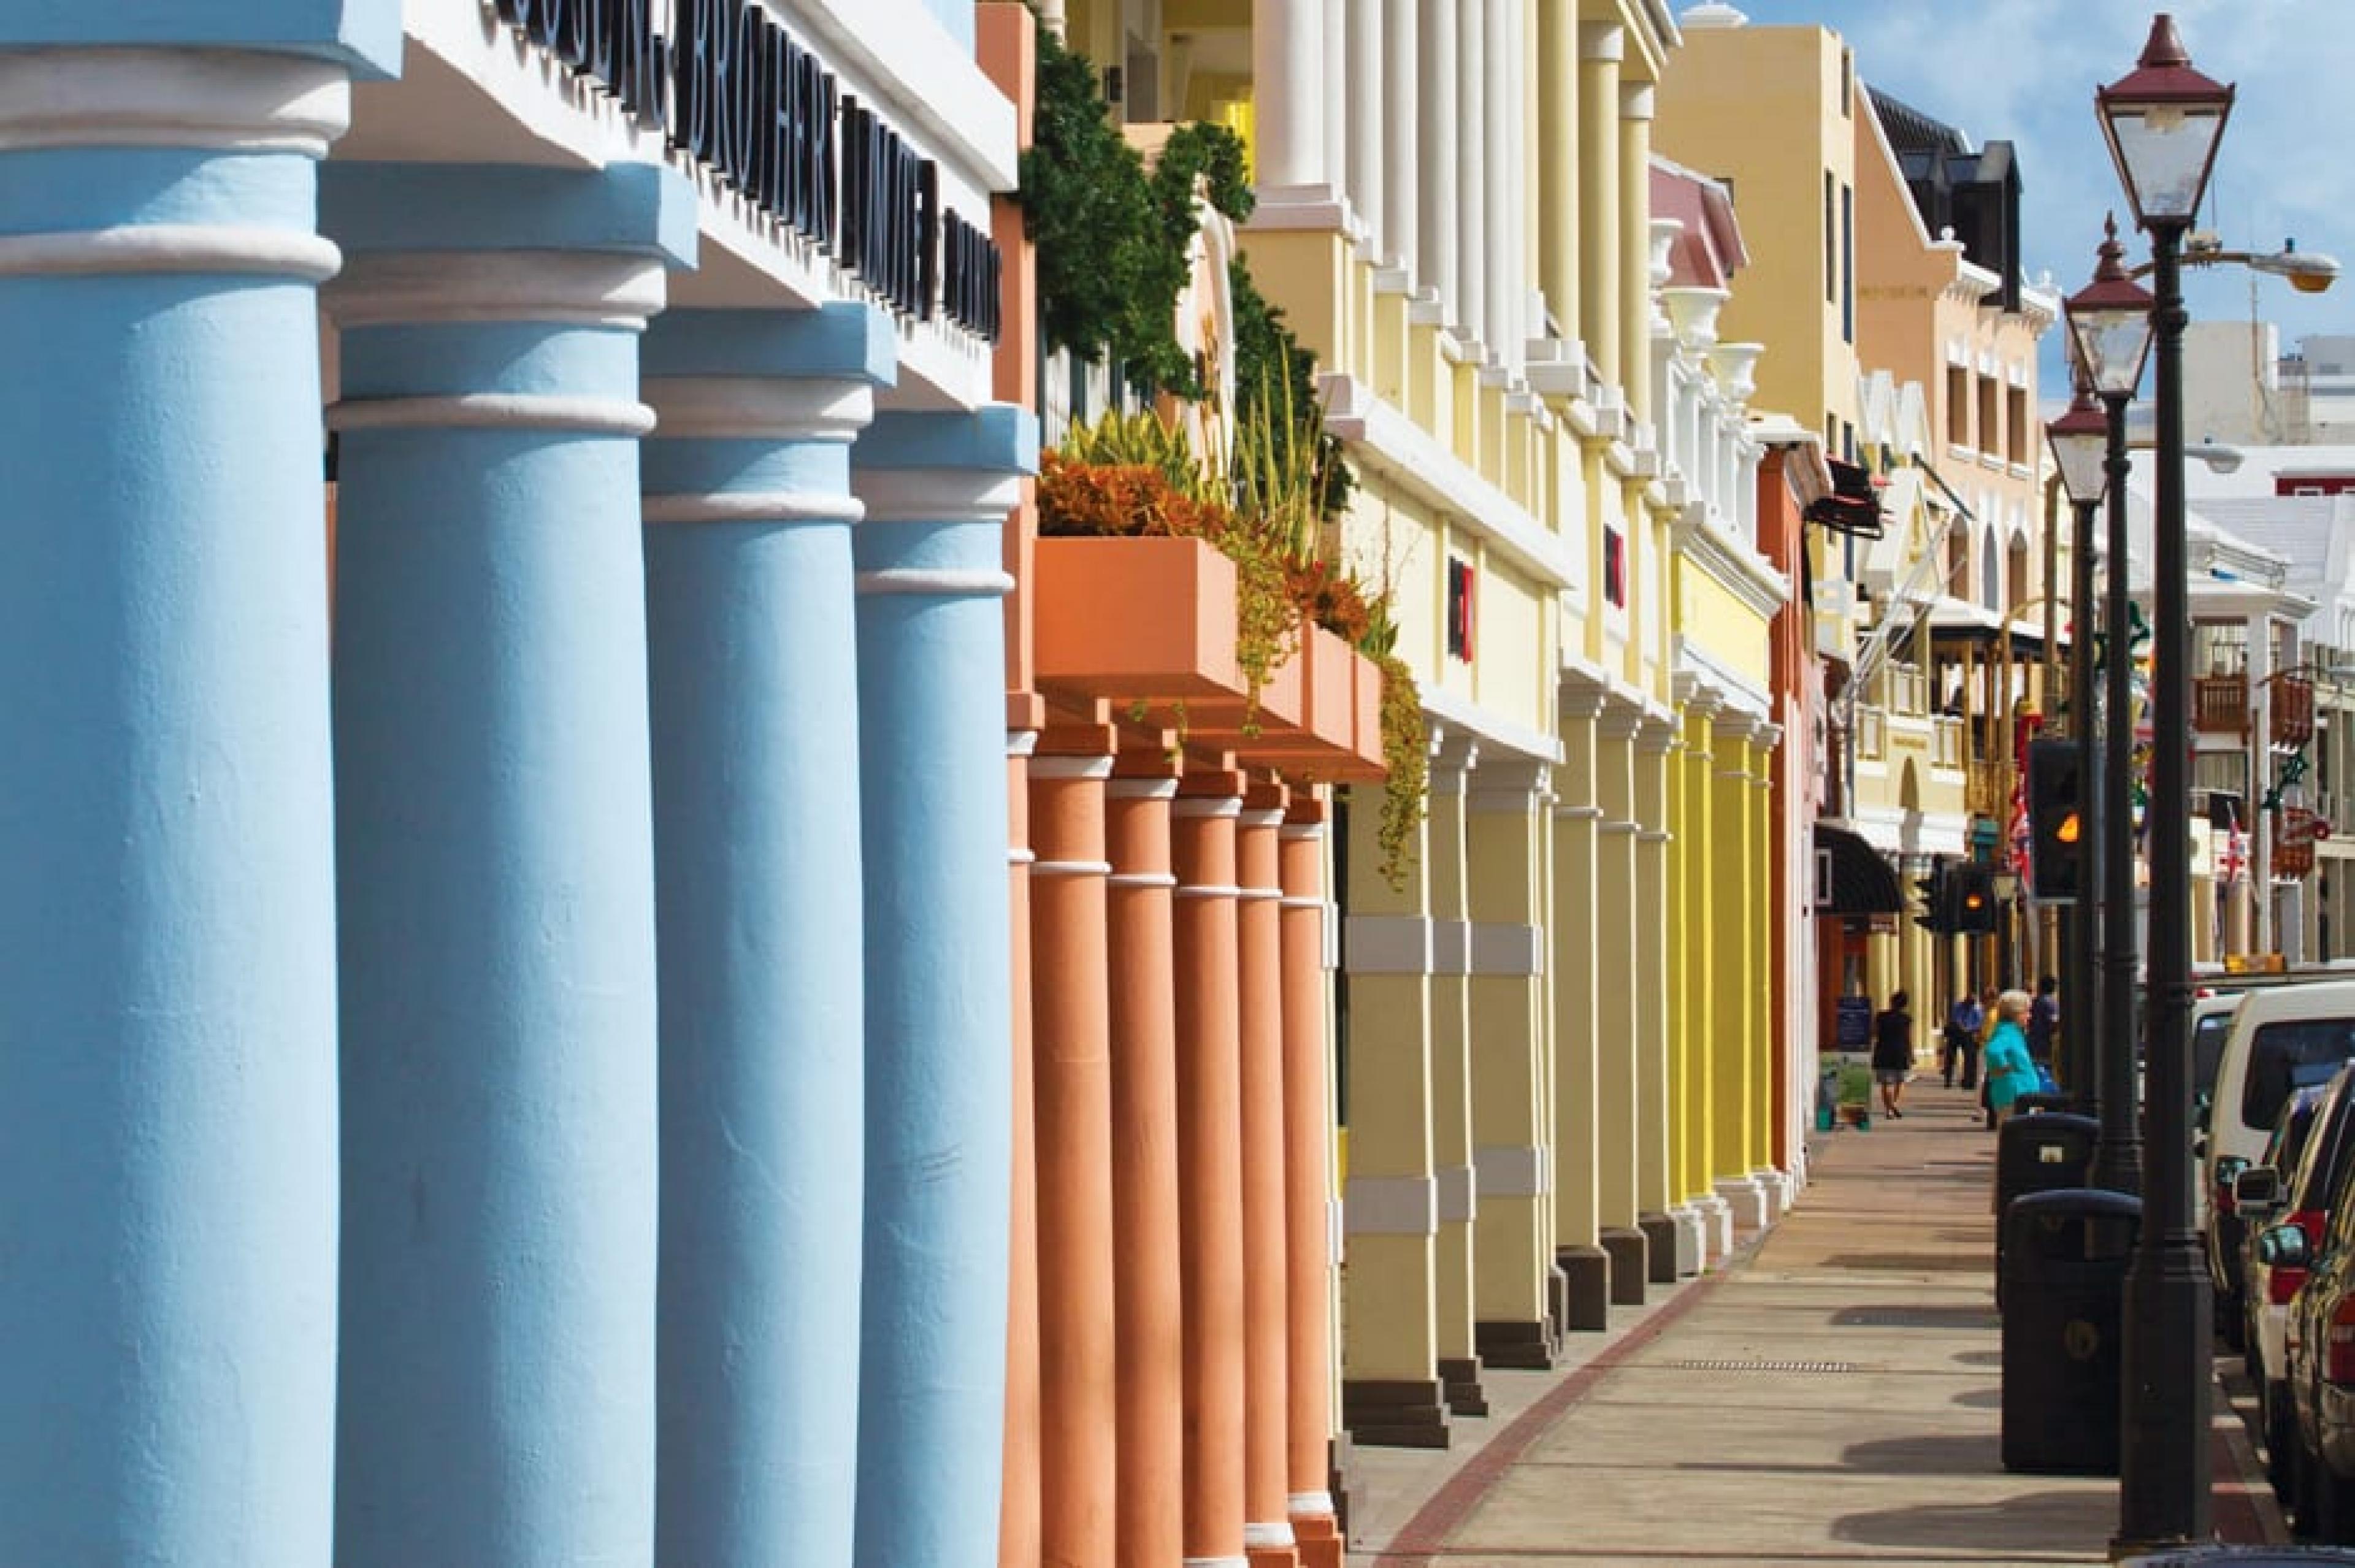 Pillors at Hamilton Town , Bermuda, Bermuda - Courtesy Bermuda Tourism Authority